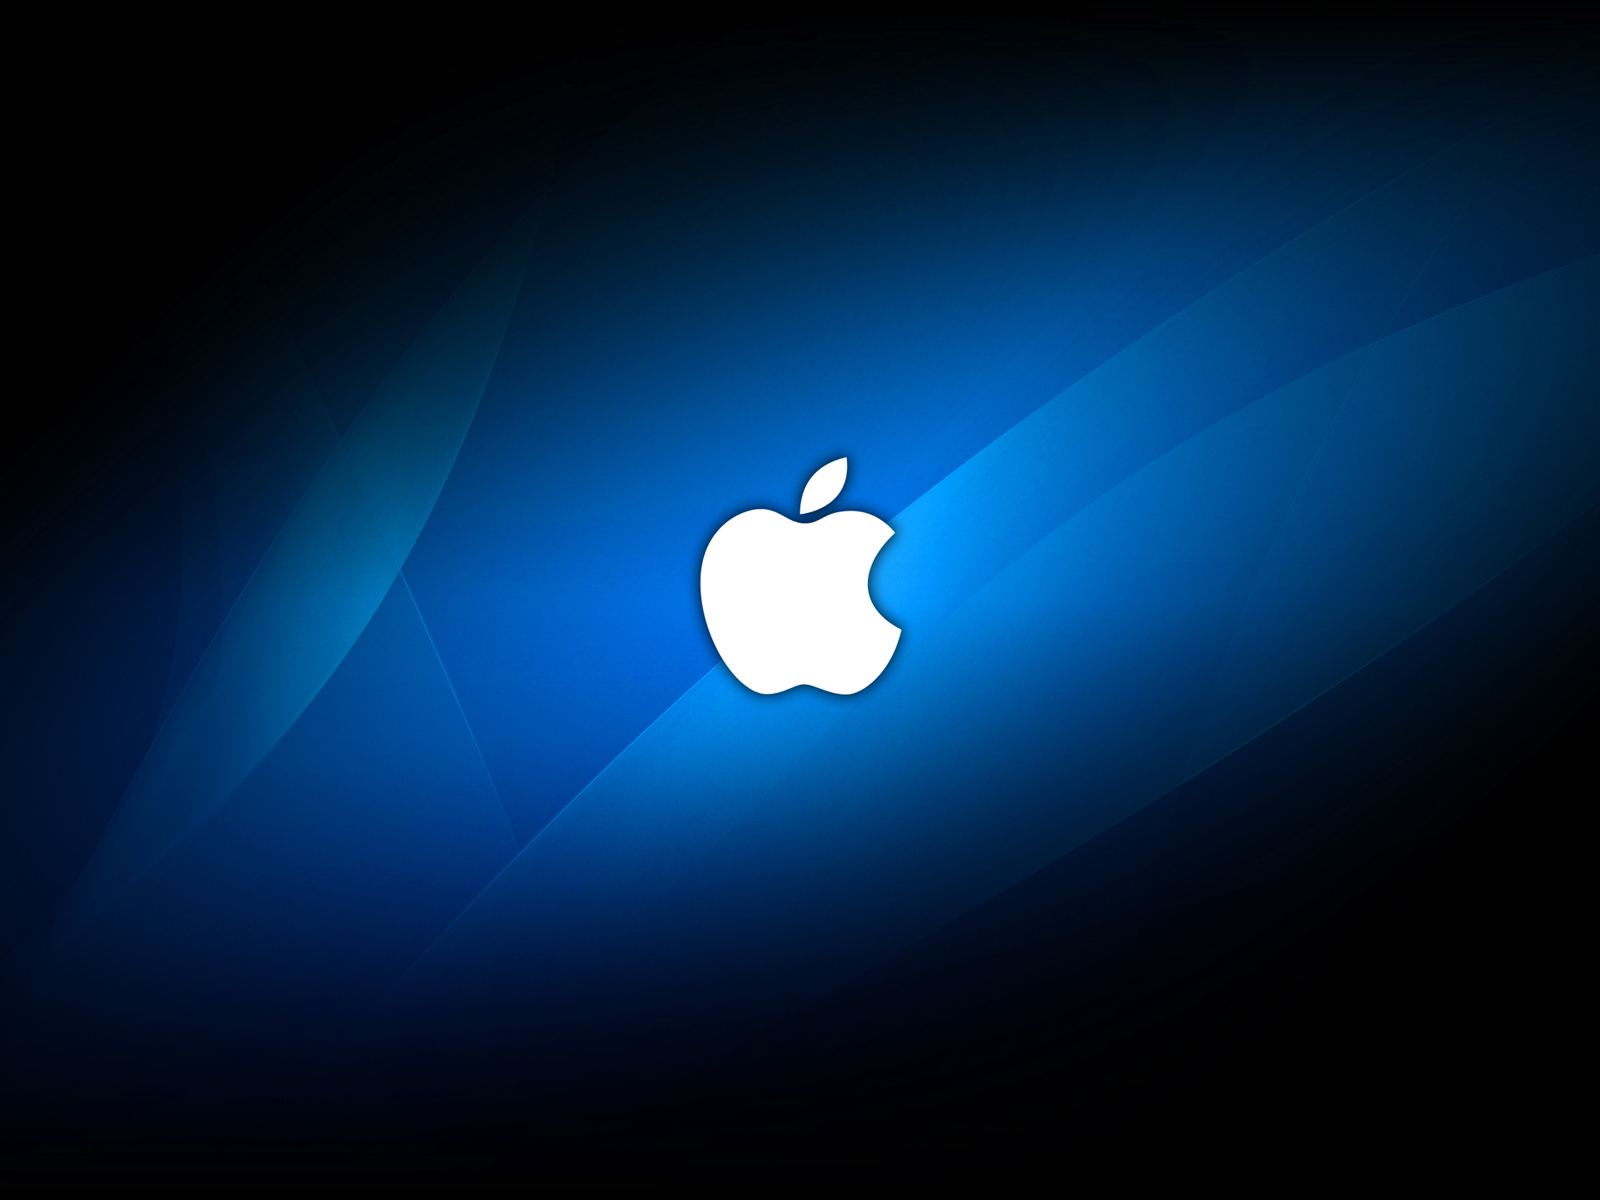 iphone logo wallpaper,blau,betriebssystem,himmel,atmosphäre,technologie